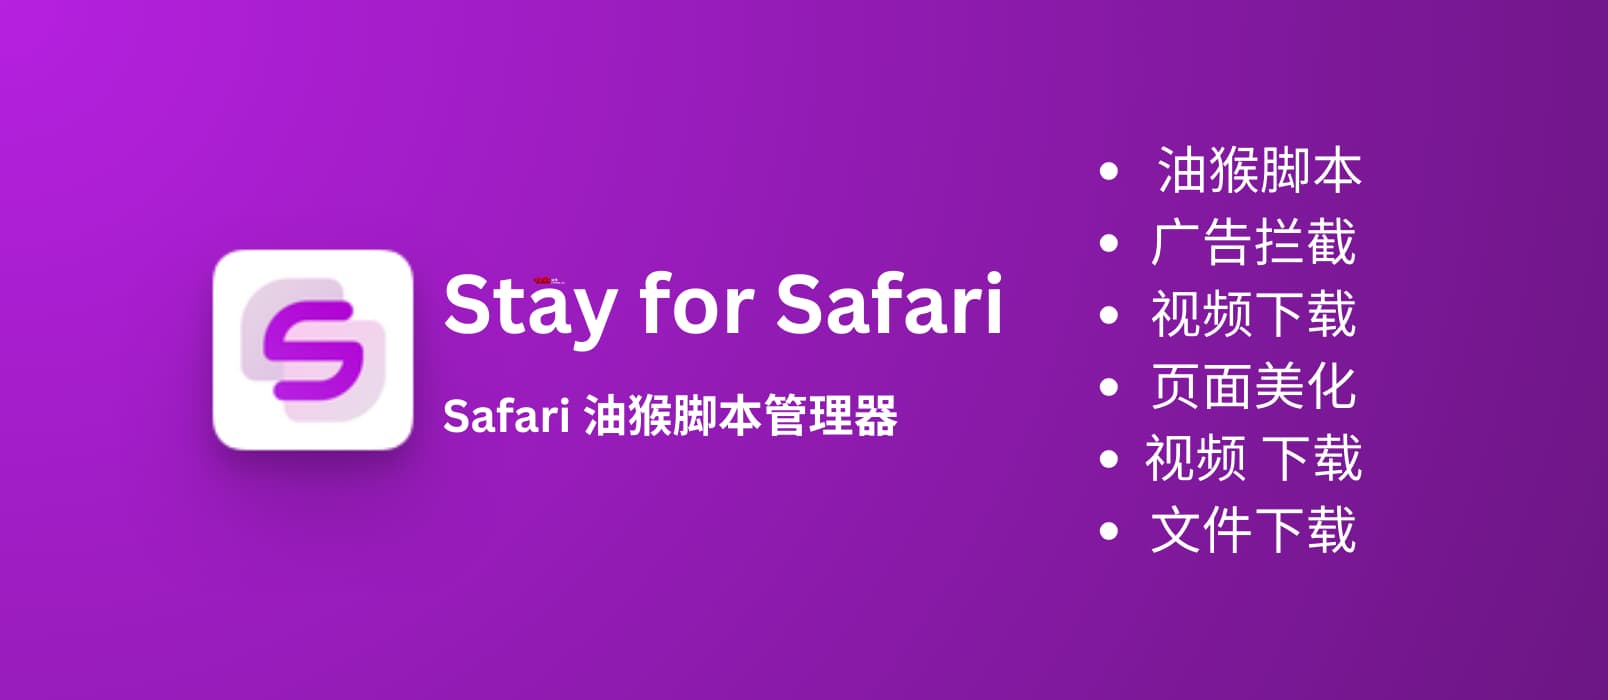 Stay for Safari - 油猴脚本、广告拦截、视频下载、页面美化等 7 个功能的 Safari 扩展[iOS/macOS] 19